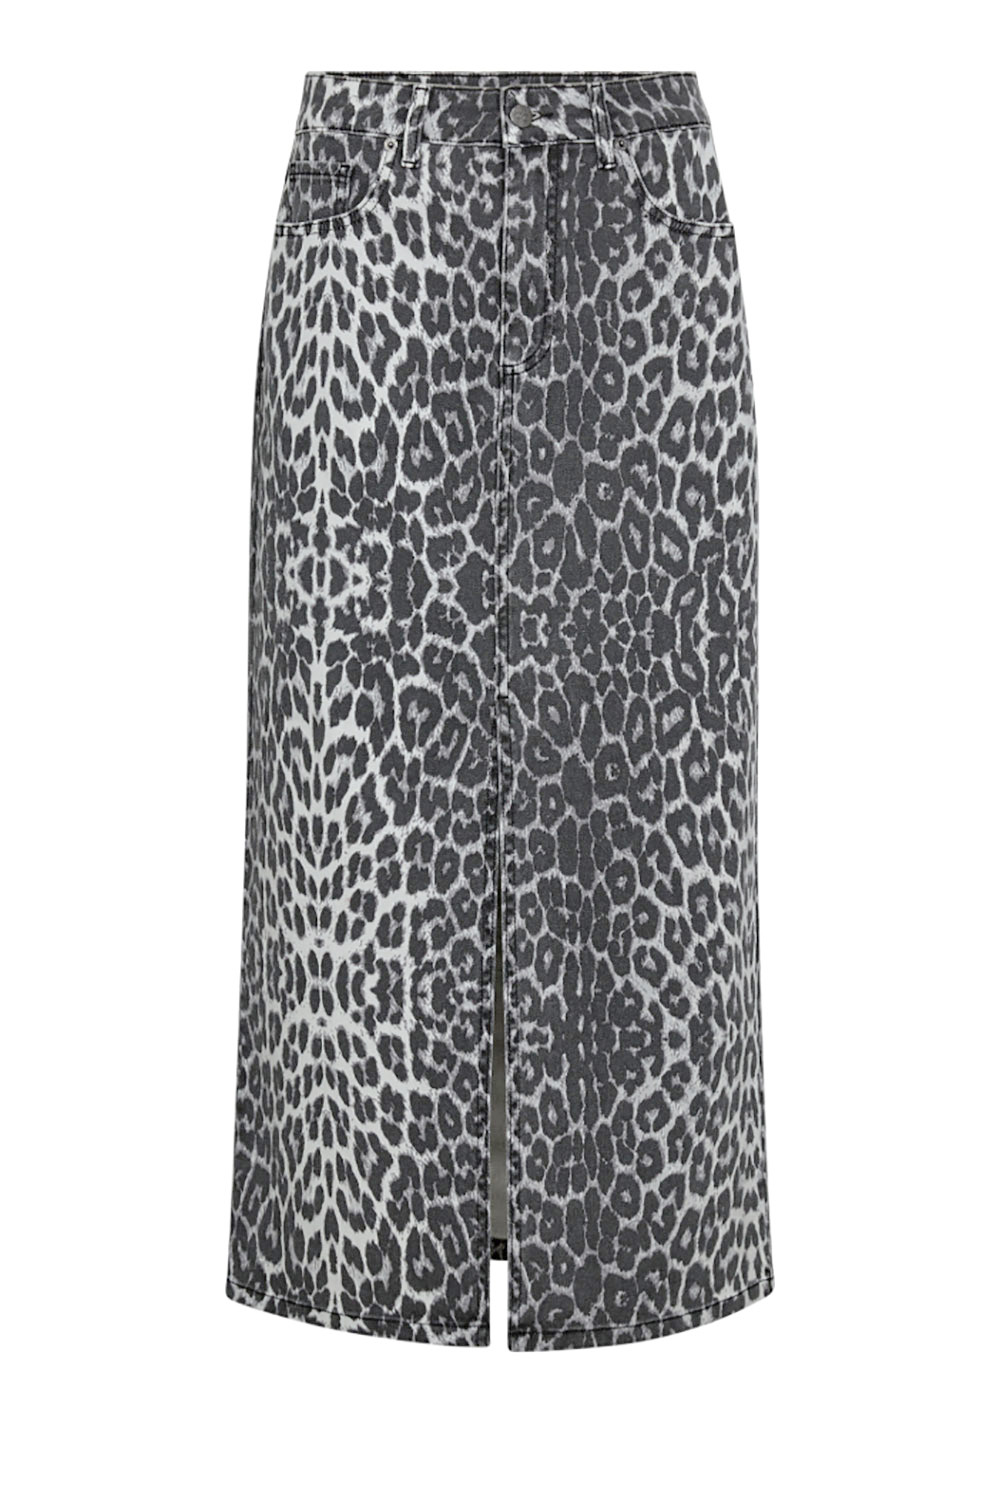 Co'Couture Leopard denim rok Leo dierenprint